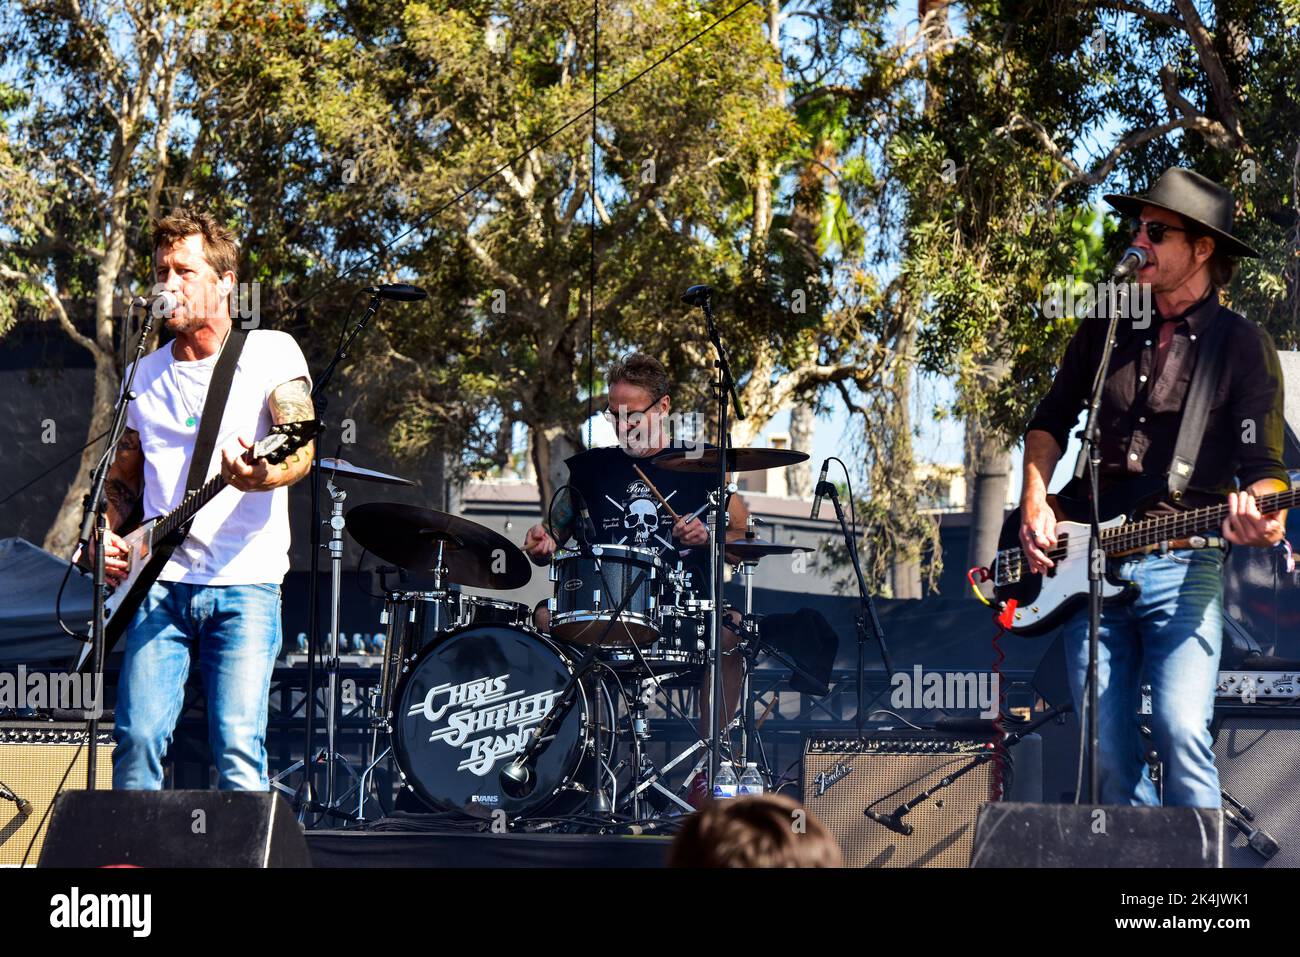 Redondo Beach, California September 17, 2022 - The Chris Shiflet Band performing on stage at BeachLife Ranch, Credit - Ken Howard/Alamy Stock Photo